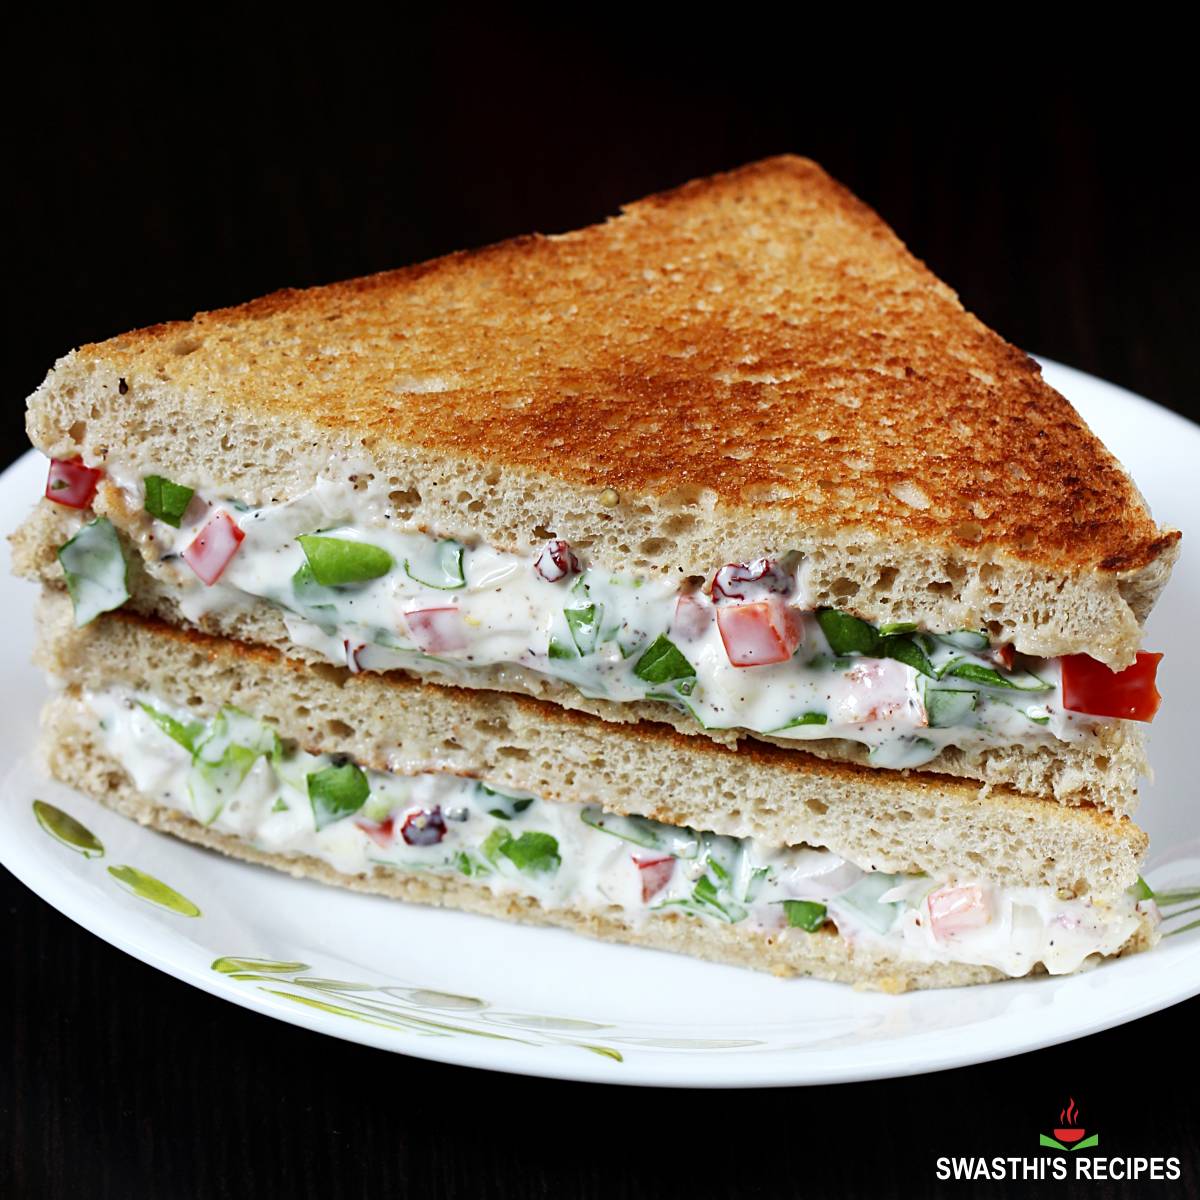 mayonnaise sandwich also known as veg mayo sandwich